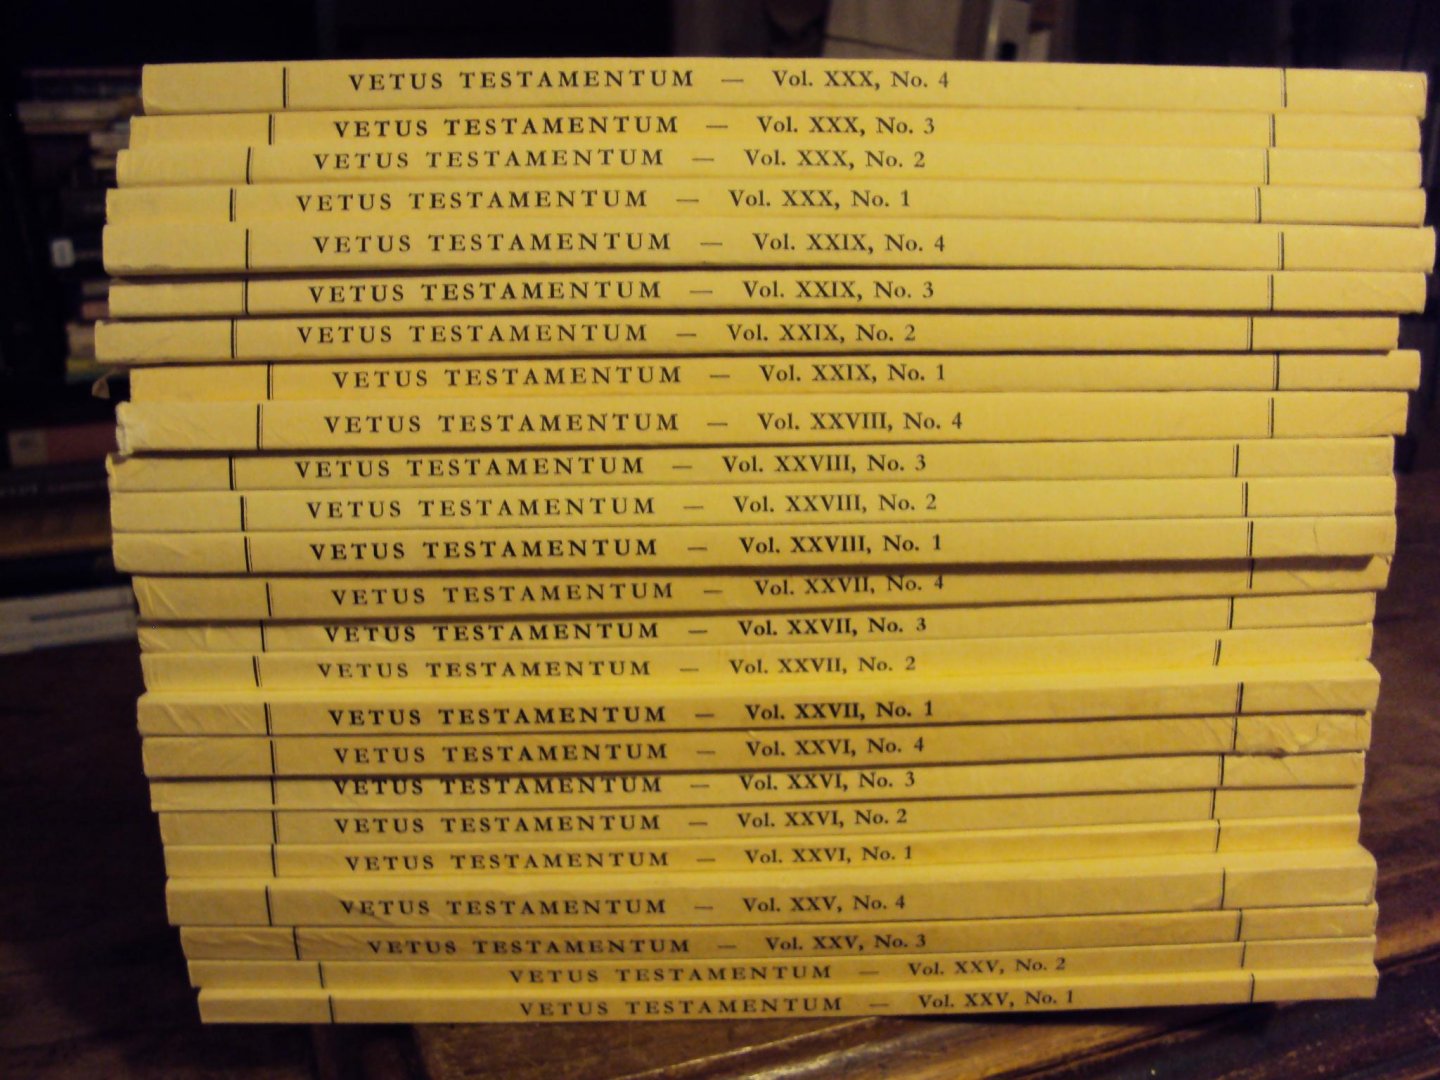  - Vetus Testamentum. Quarterly published by the International Organization of Old Testament Scholars. Volumes 25-30